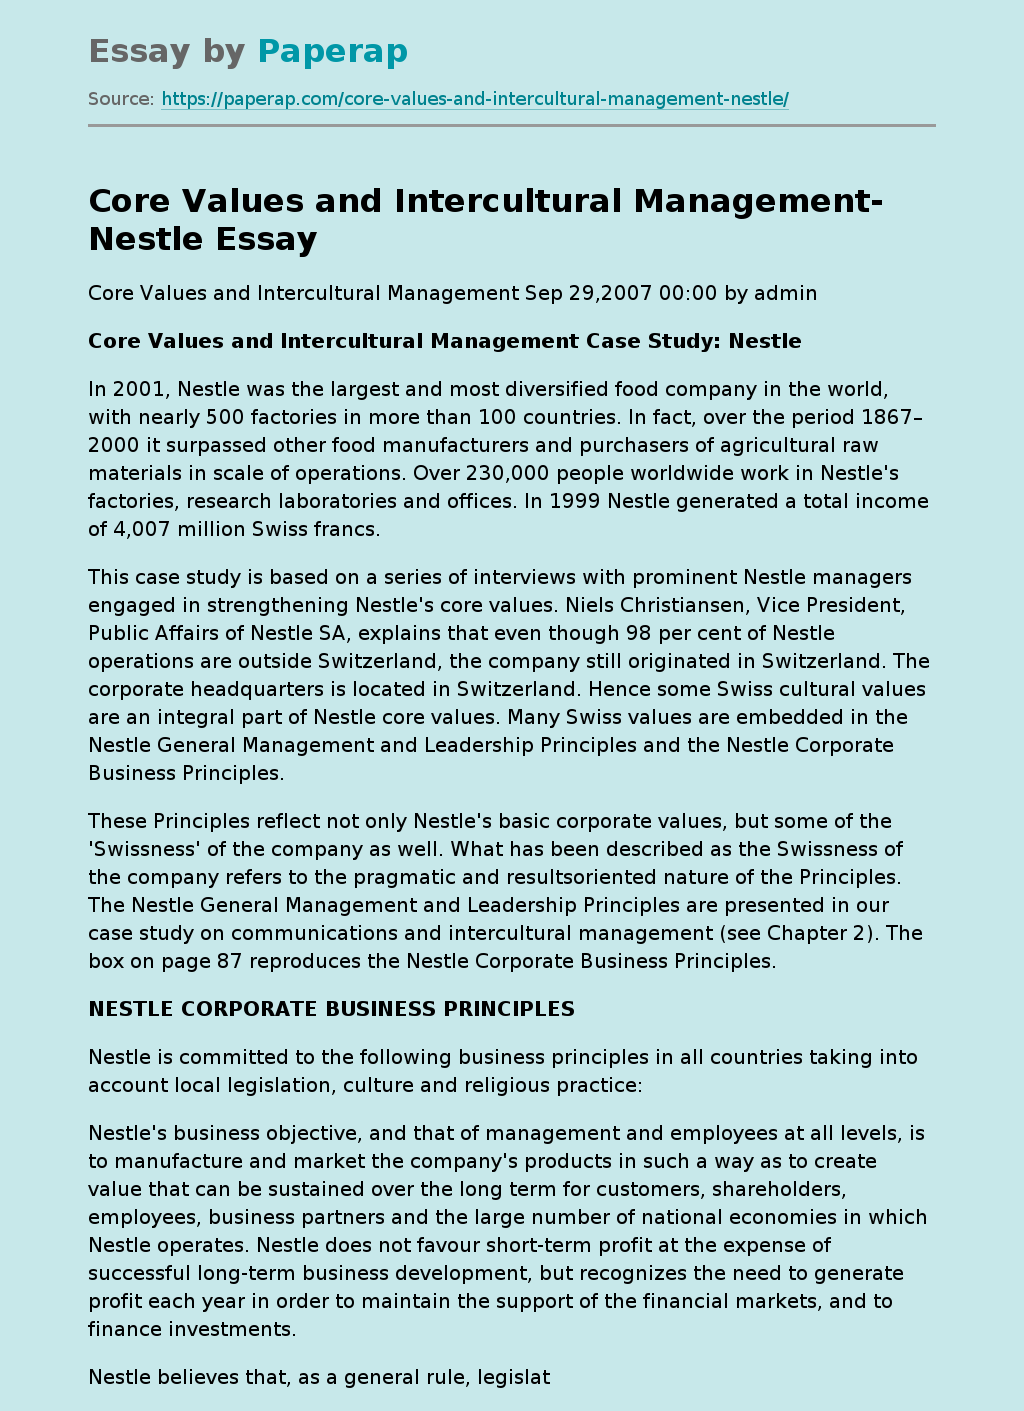 Core Values and Intercultural Management-Nestle